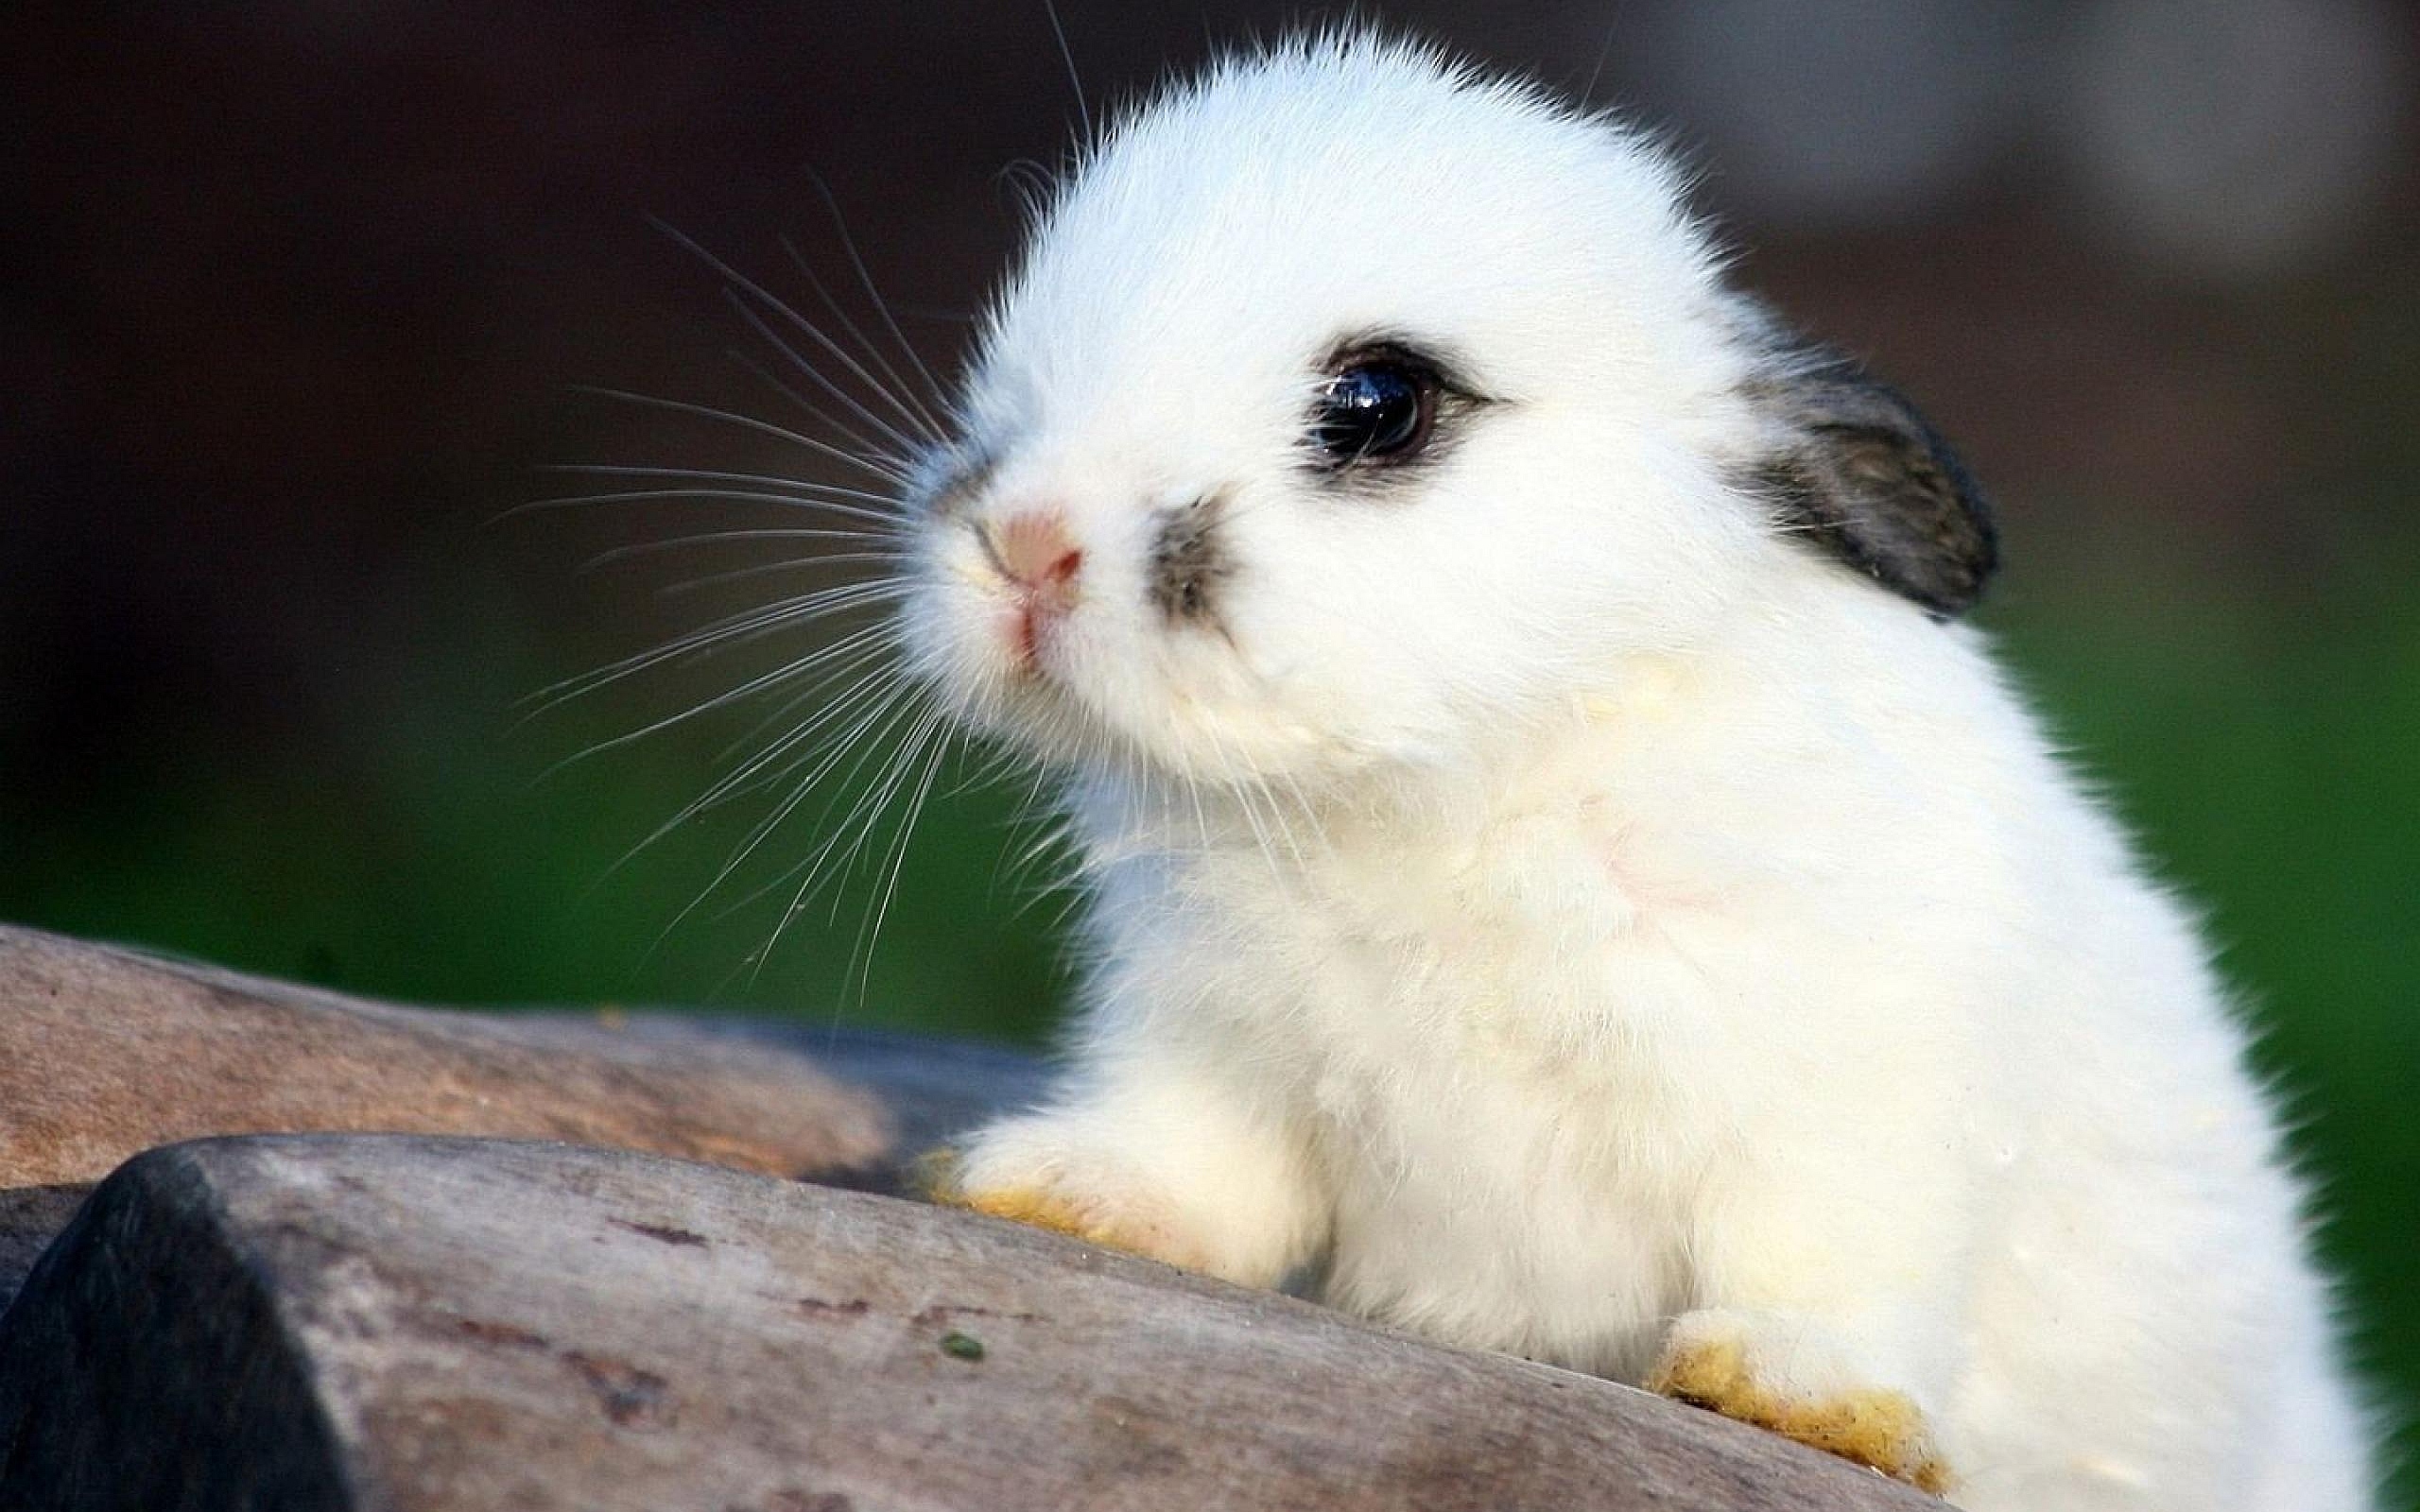 Help me name my bunny rabbit!